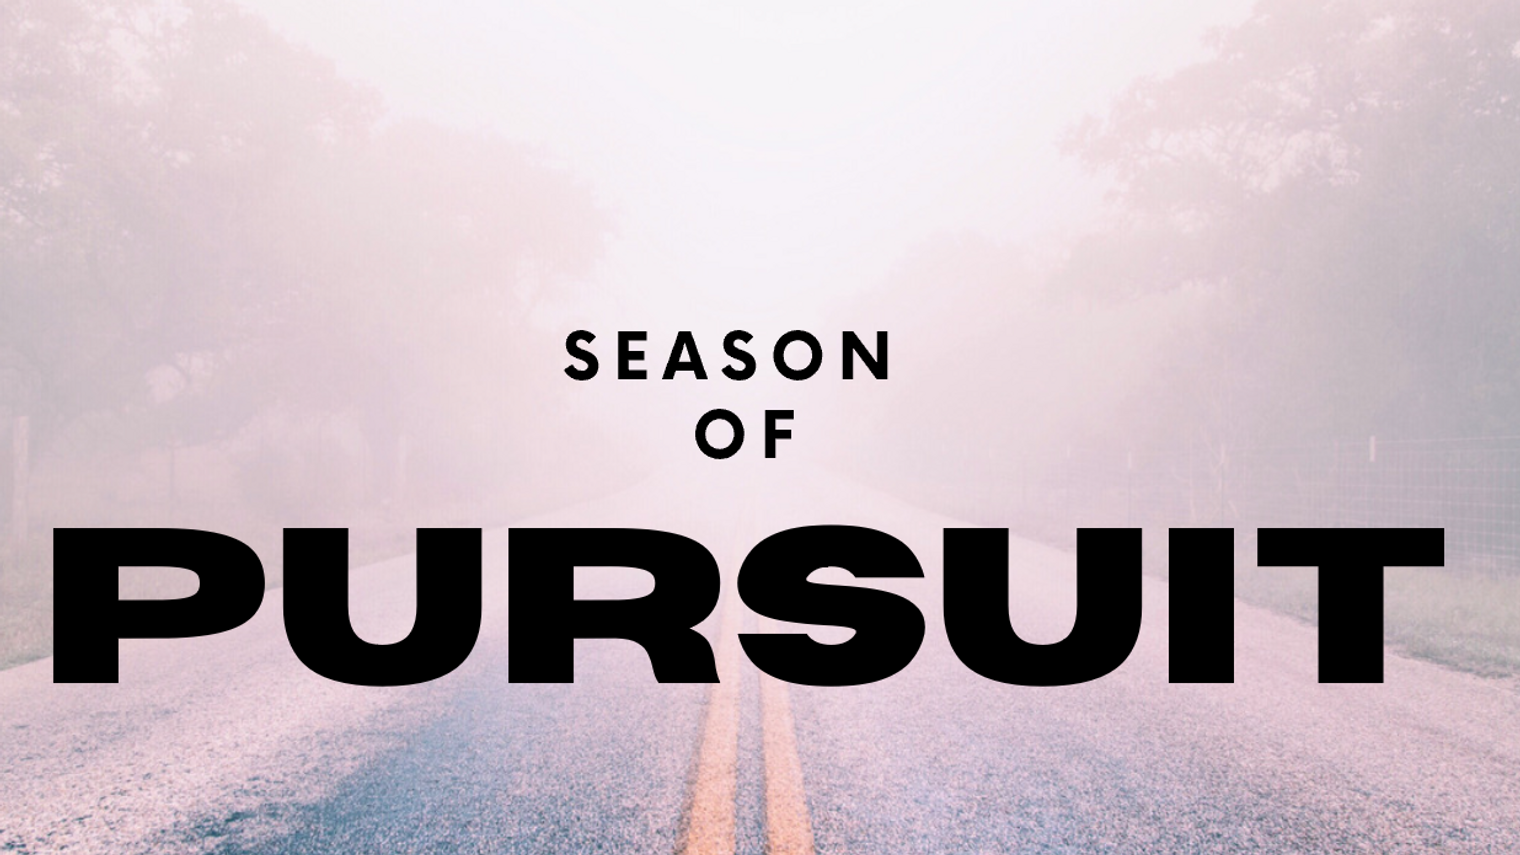 The Season of Pursuit